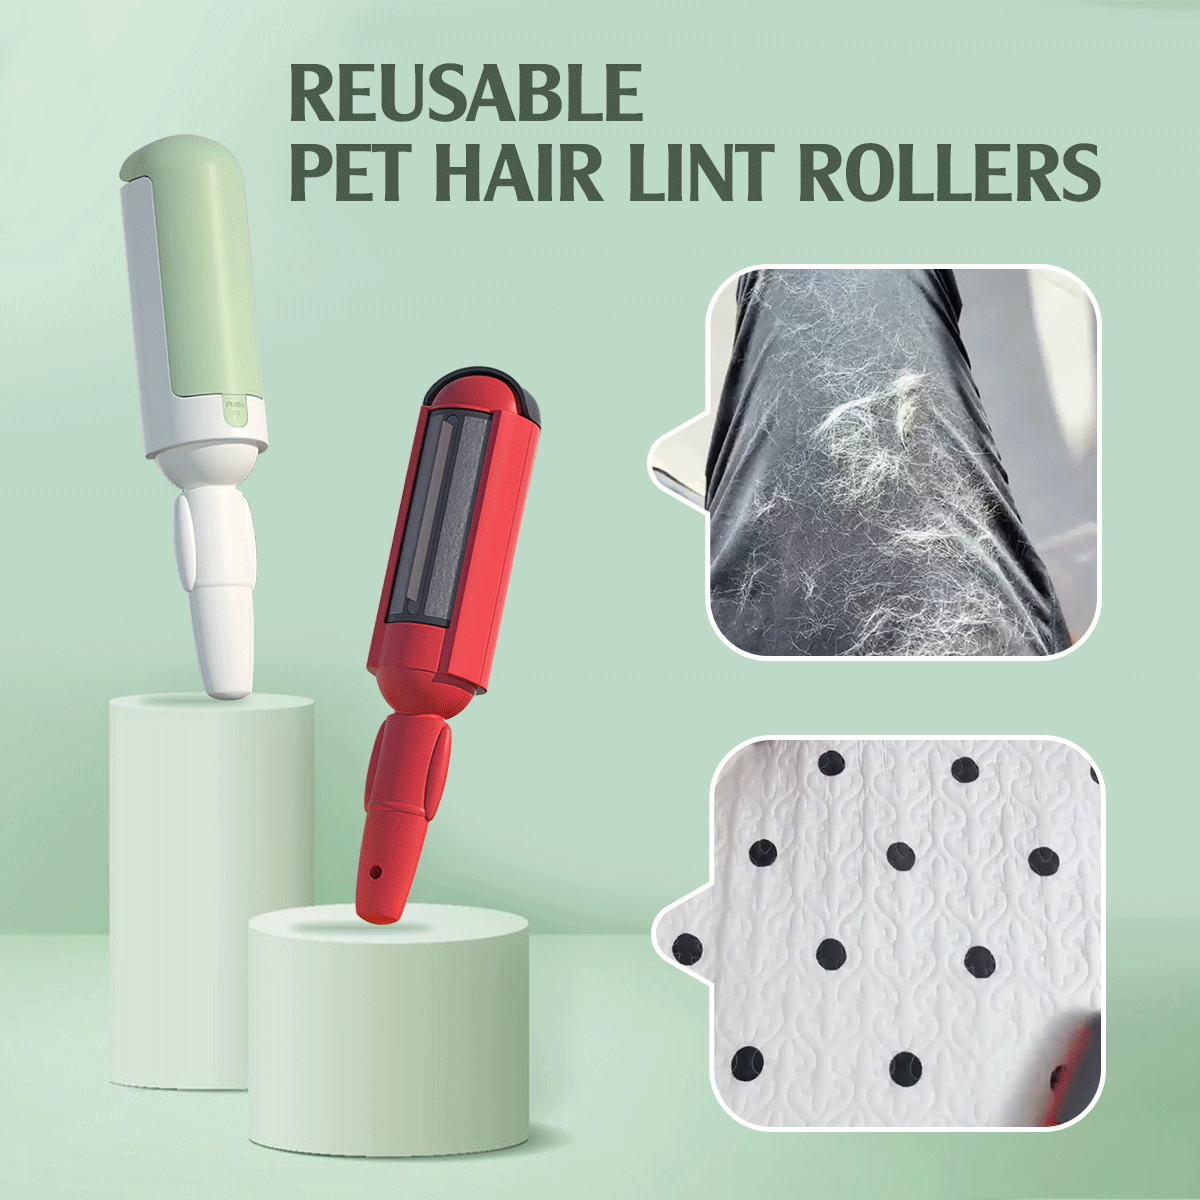 Reusable Pet Hair Lint Rollers